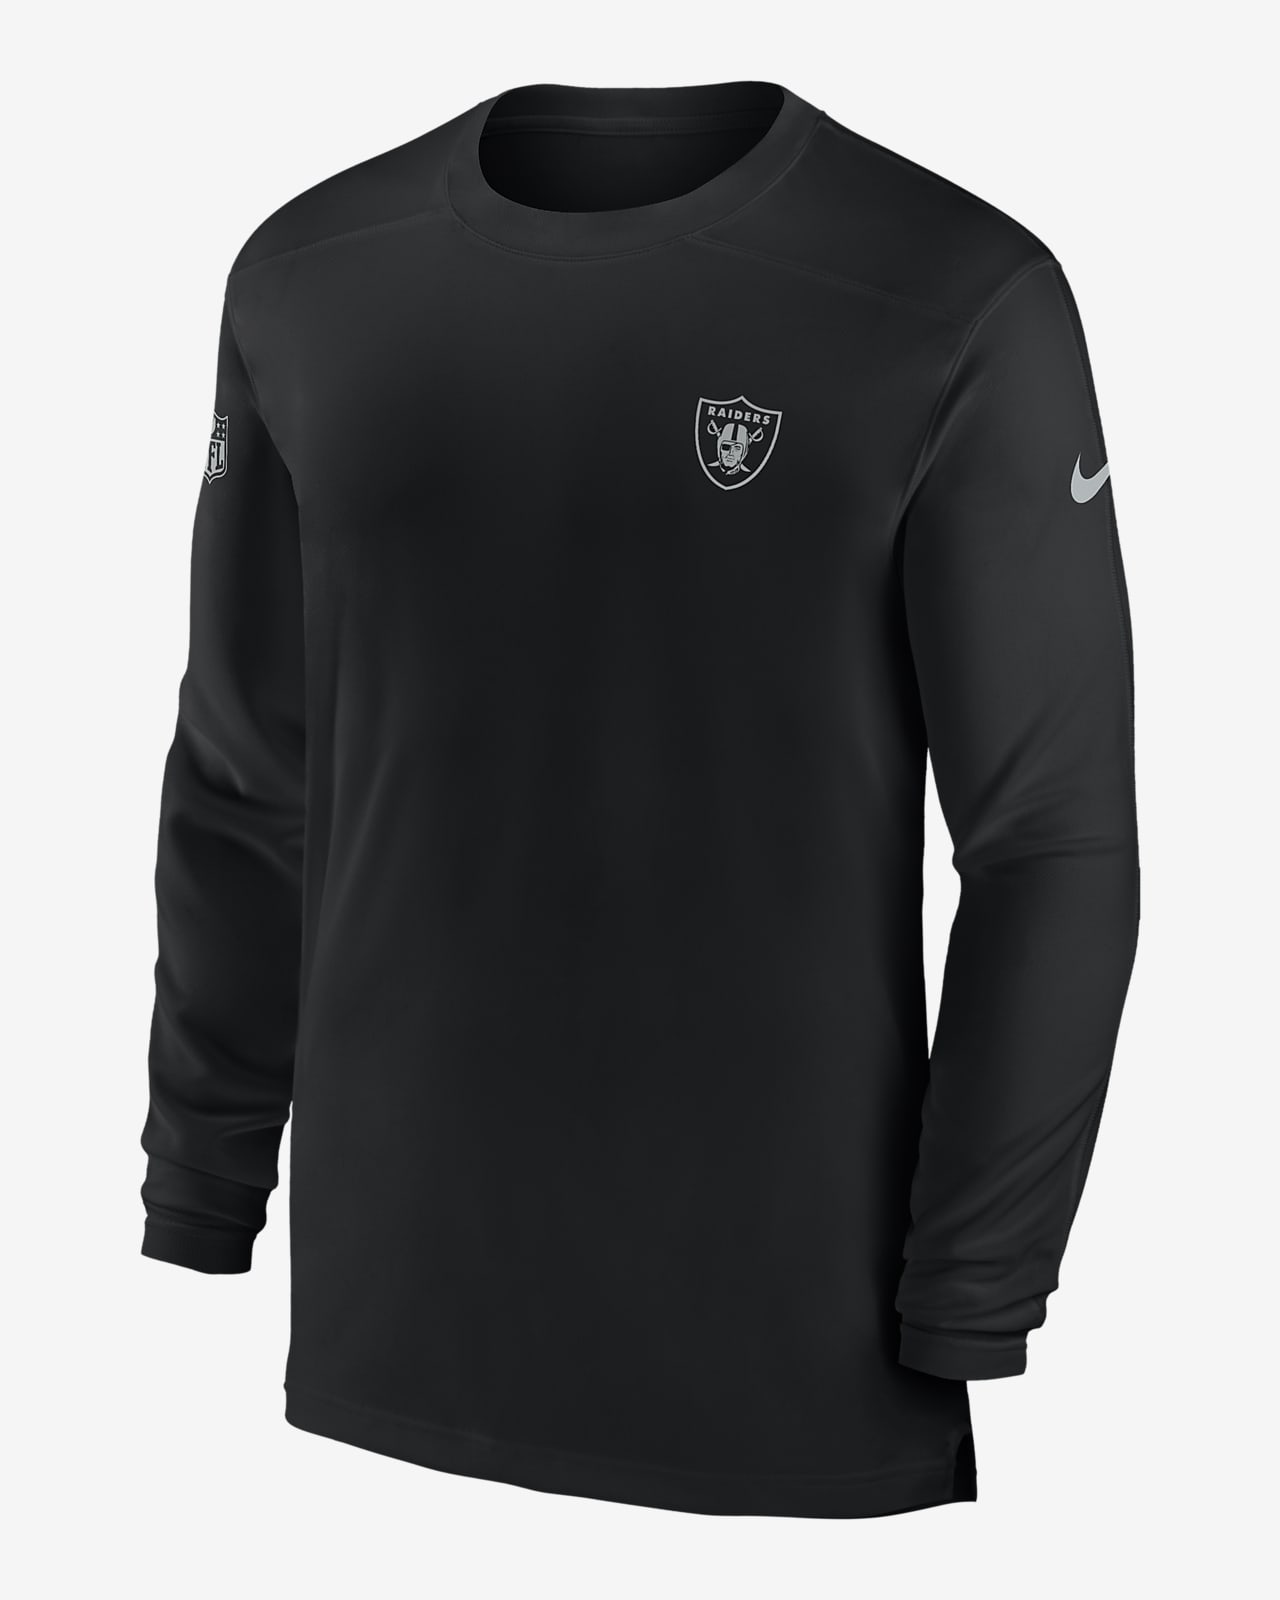 Nike Dri-FIT Sideline Coach (NFL Las Vegas Raiders) Men's Long-Sleeve Top